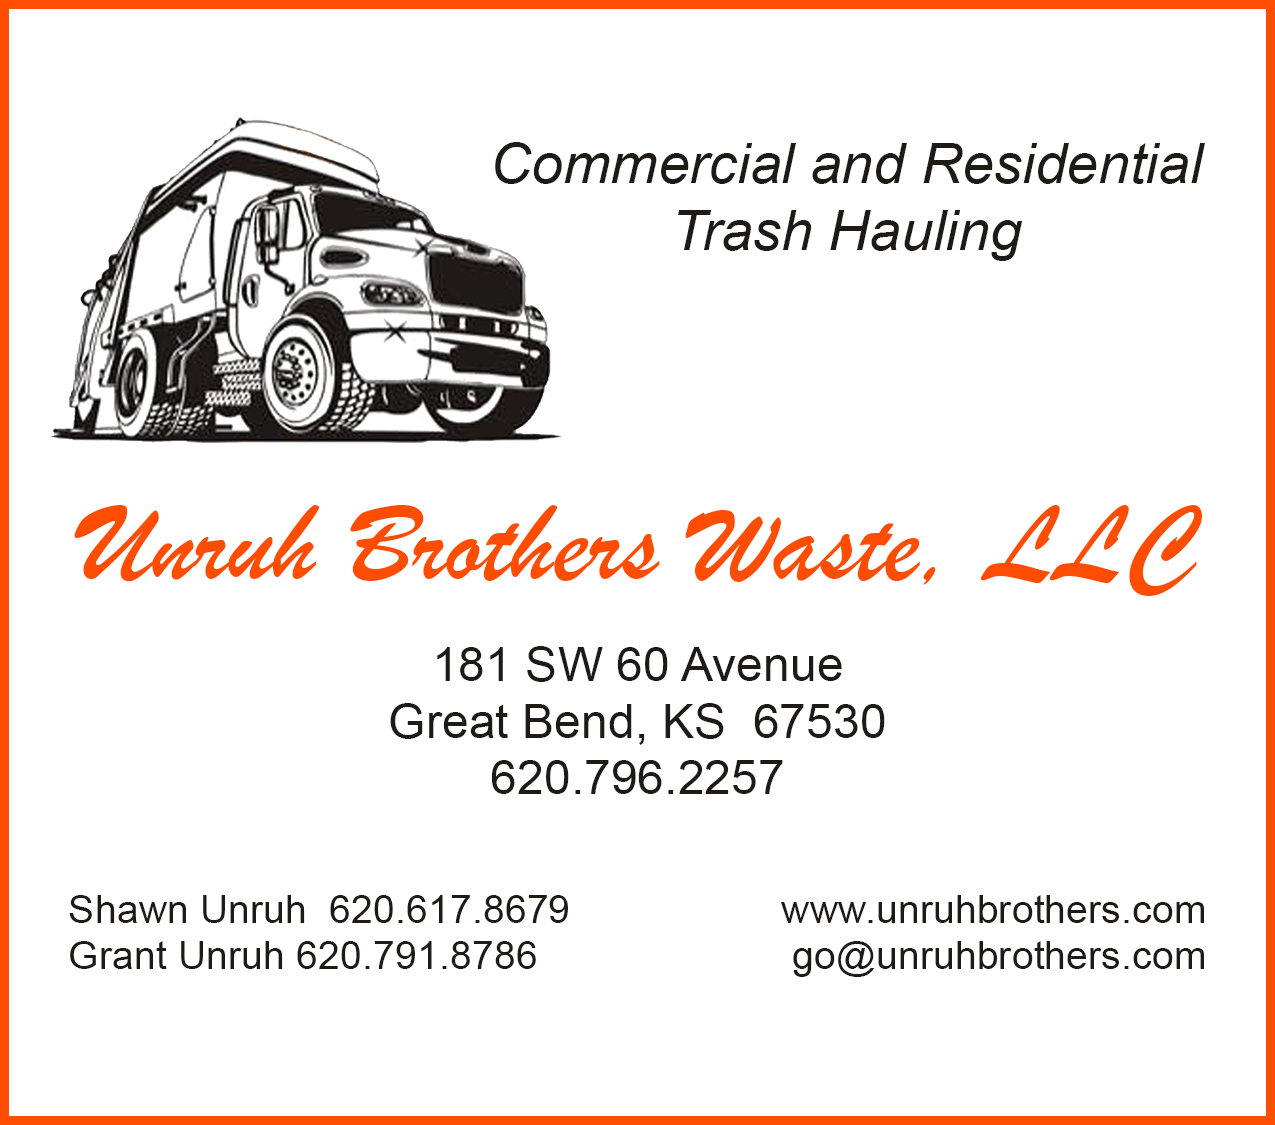 Unruh Brothers Waste, LLC